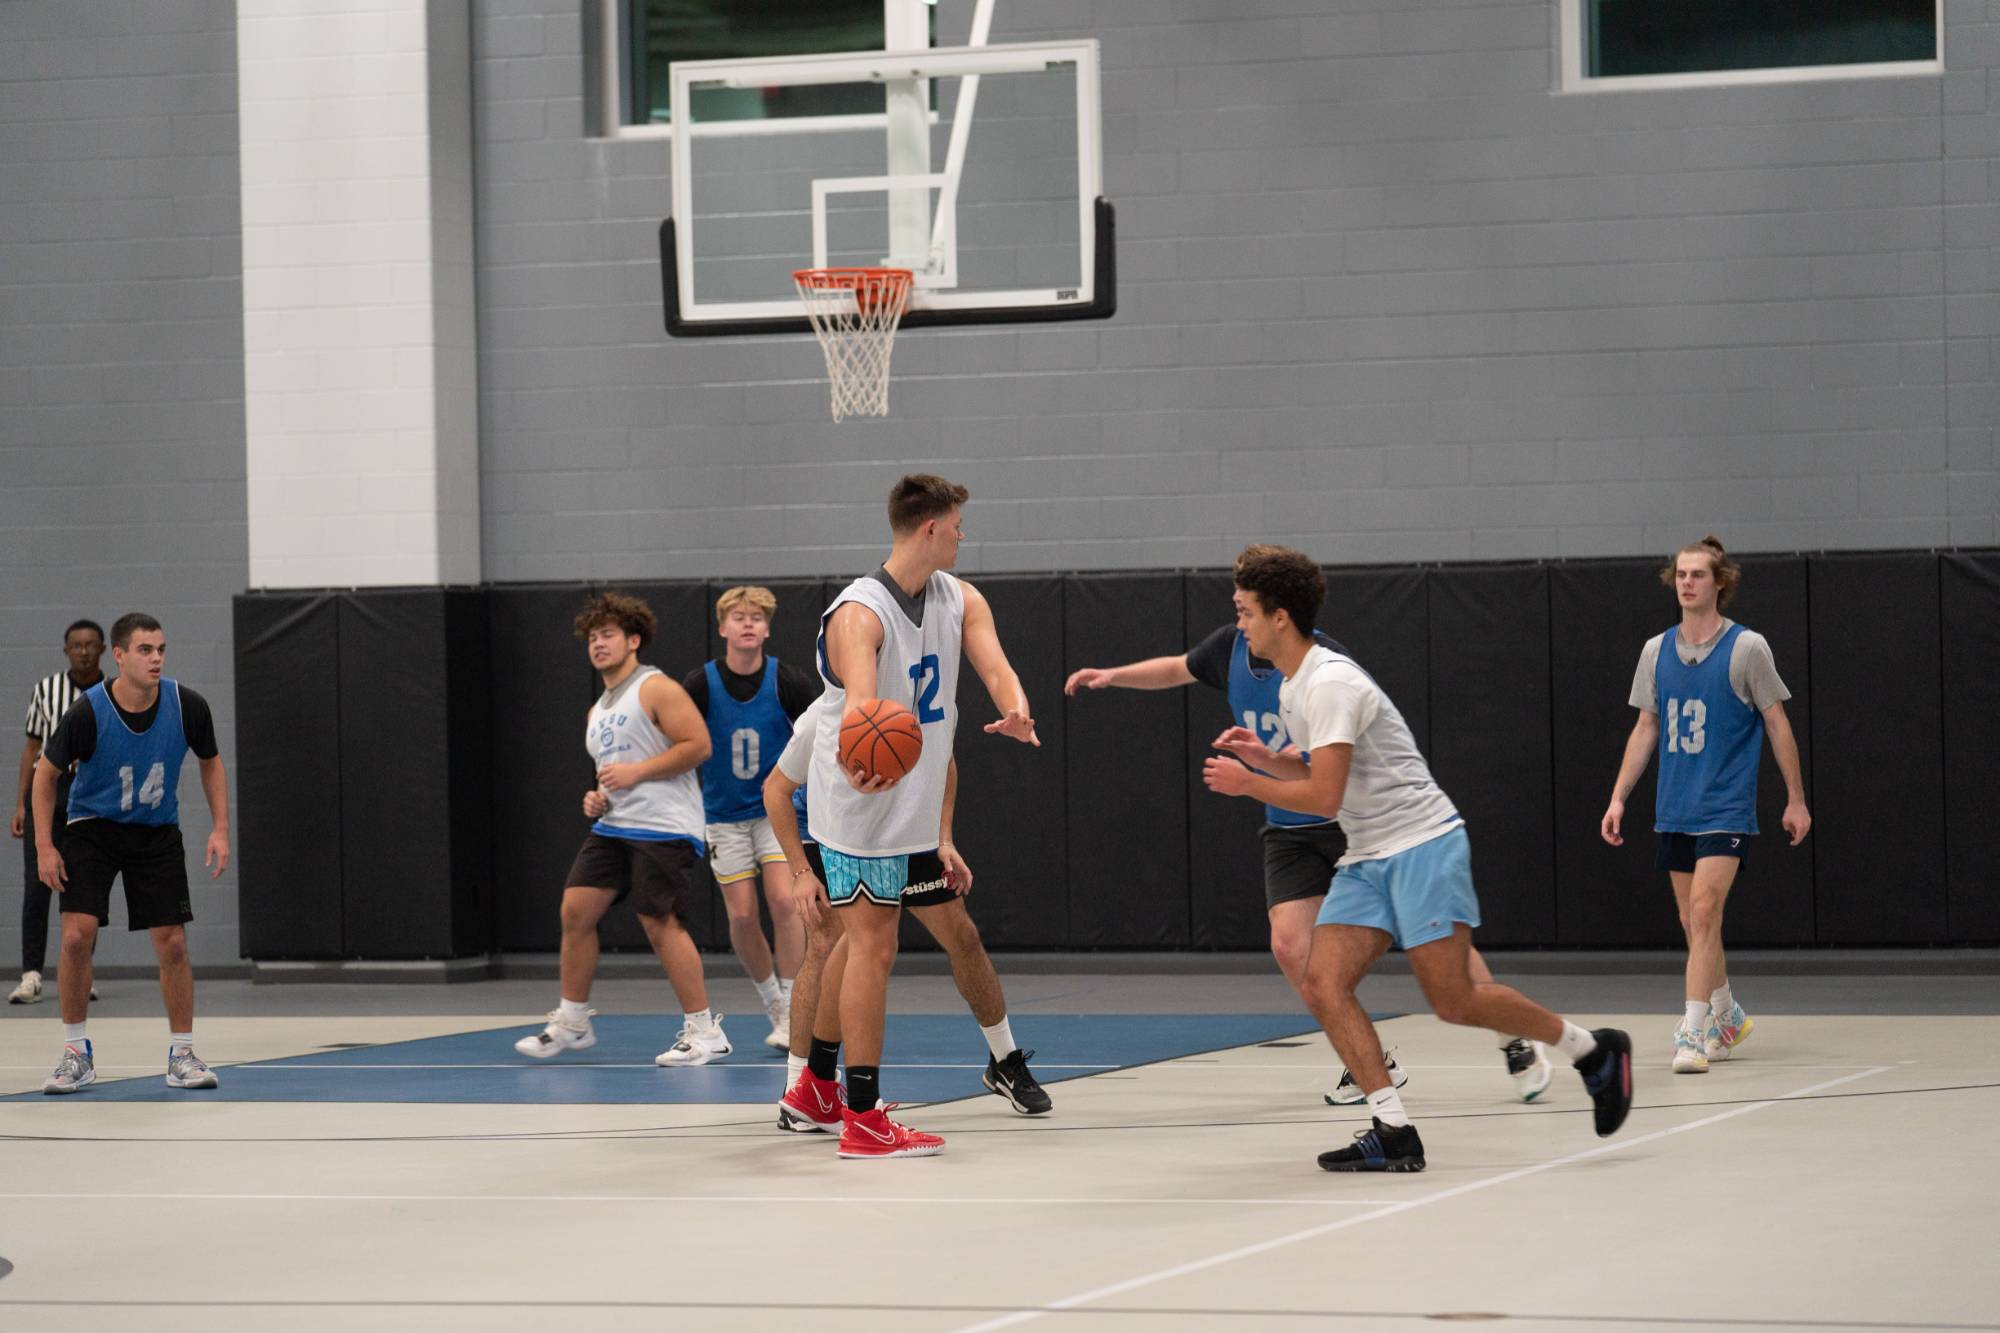 basketball player handing off ball to teammate